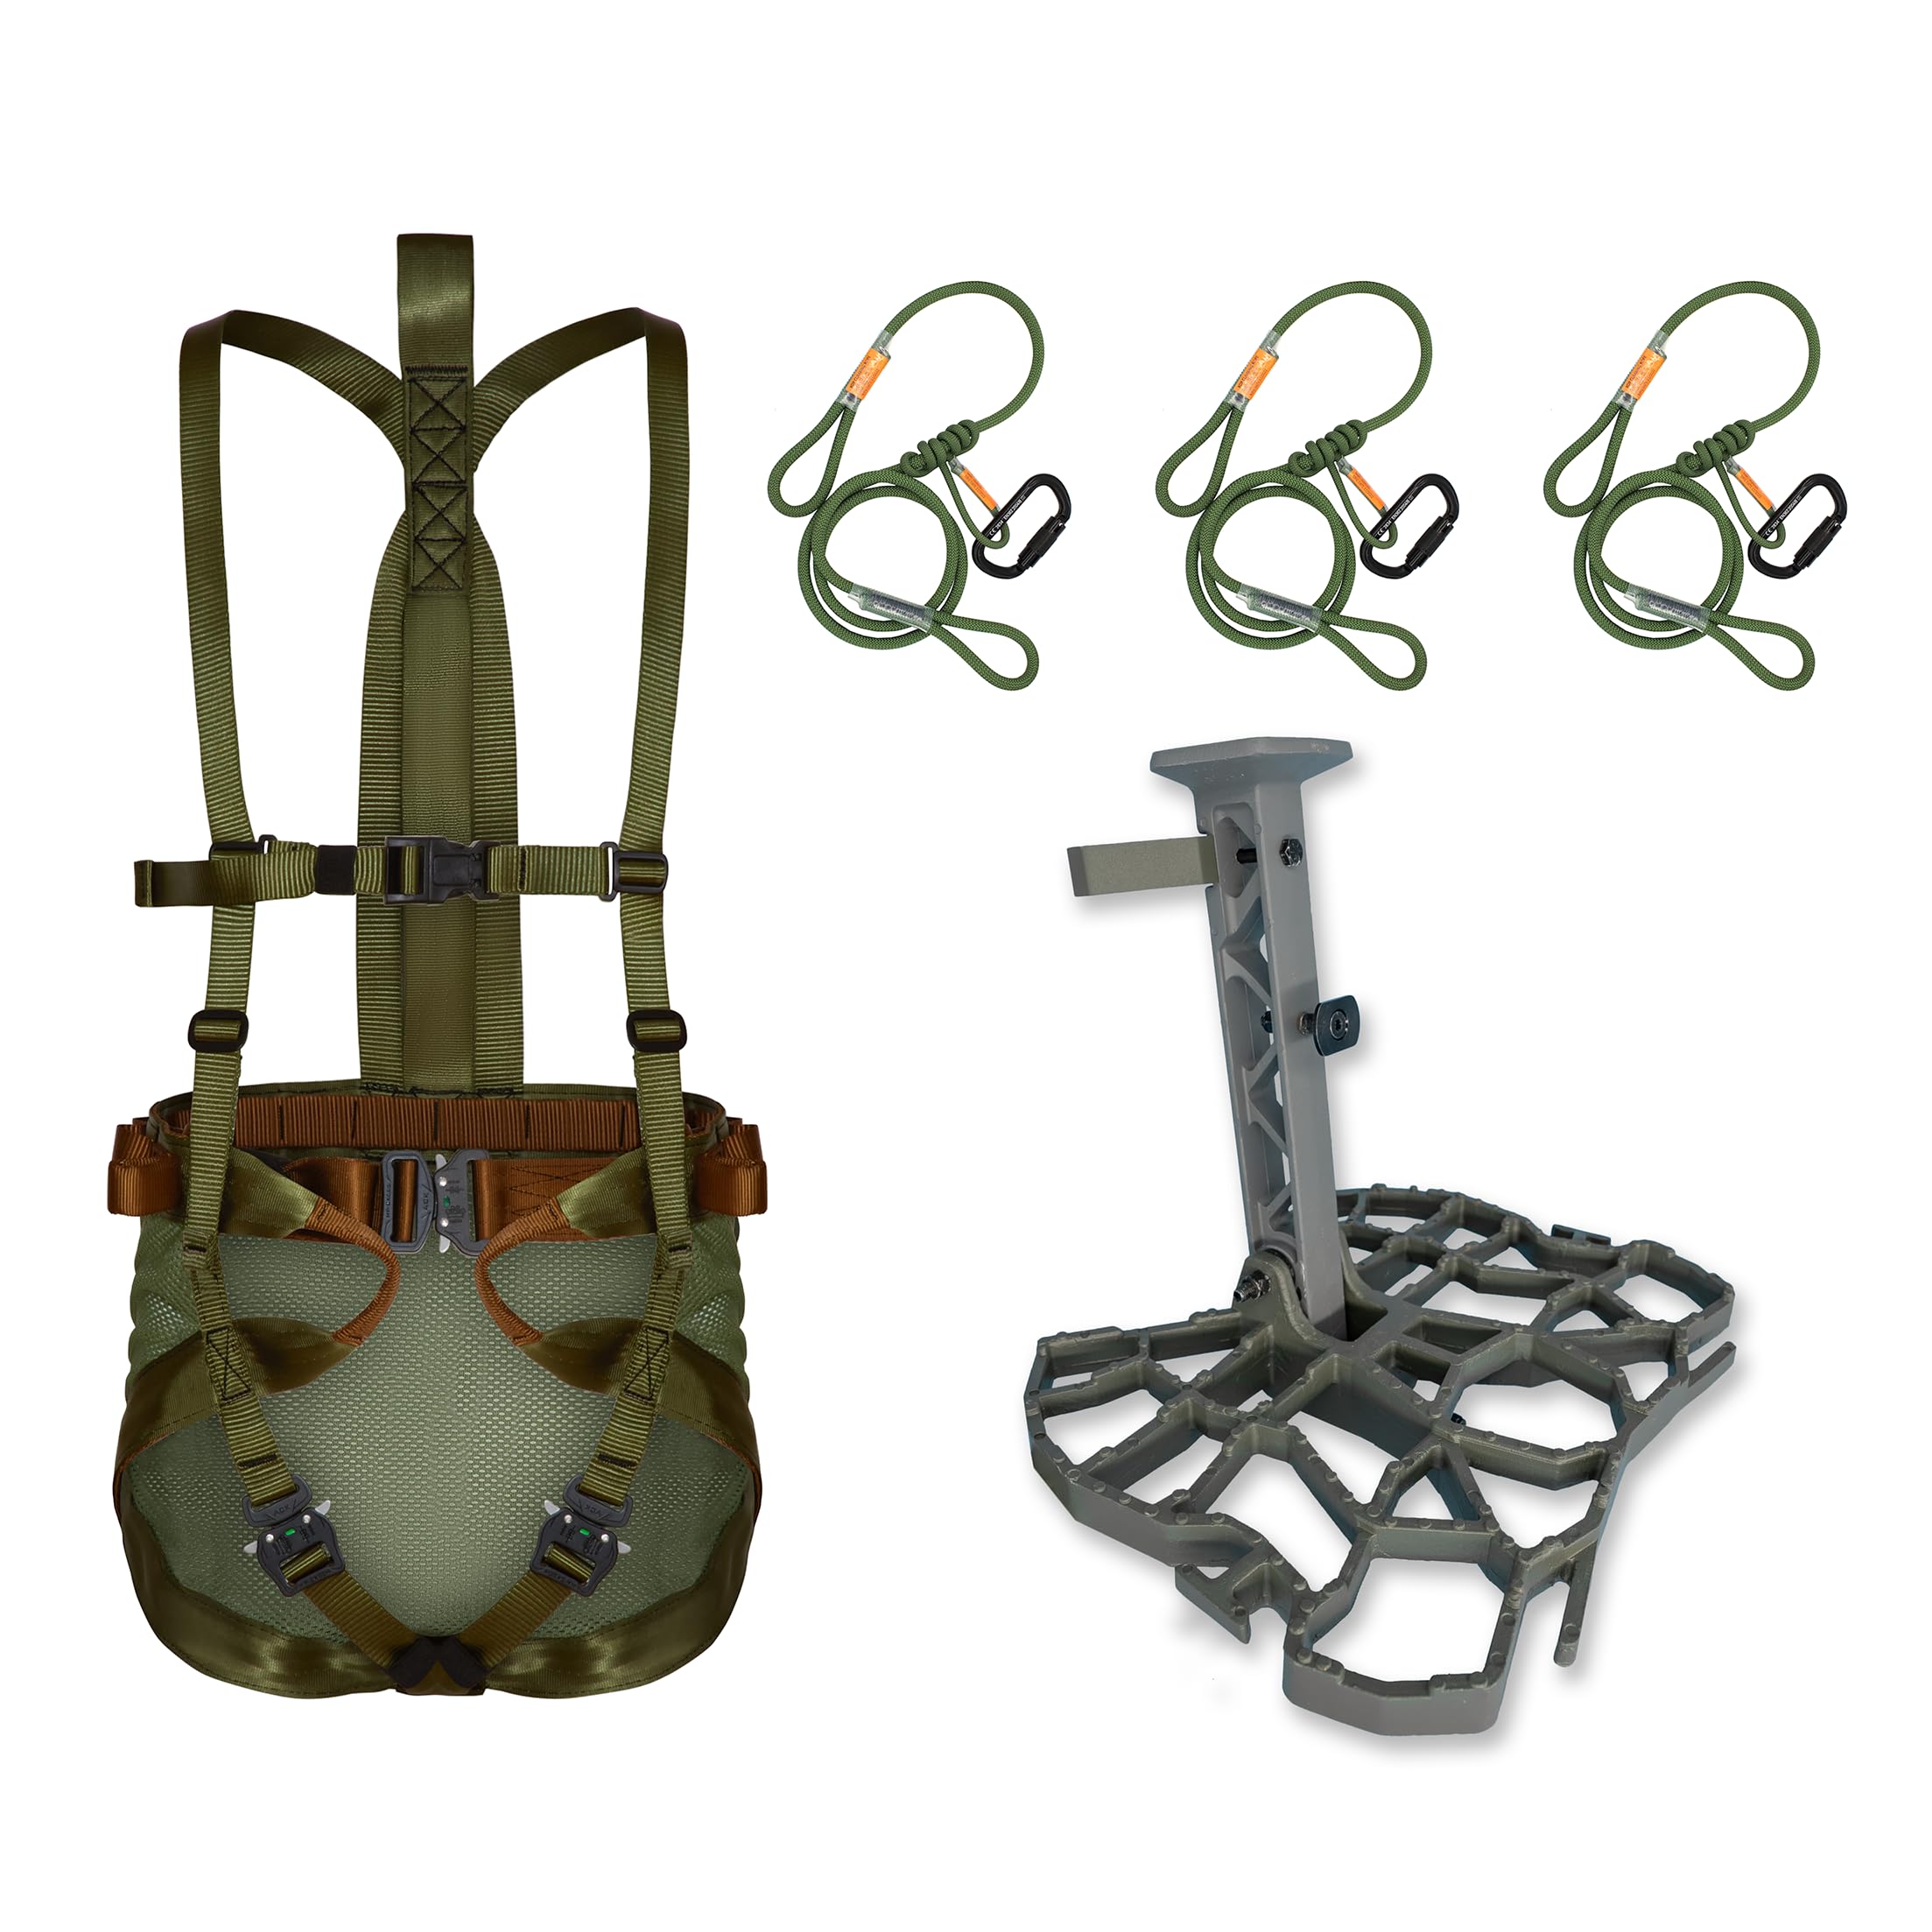 Sandlot Complete Tree Saddle Hunting System - Includes Edge Tree Saddle Platform, Mondo Saddle Harness and Carrying Bag, XOP GREEN